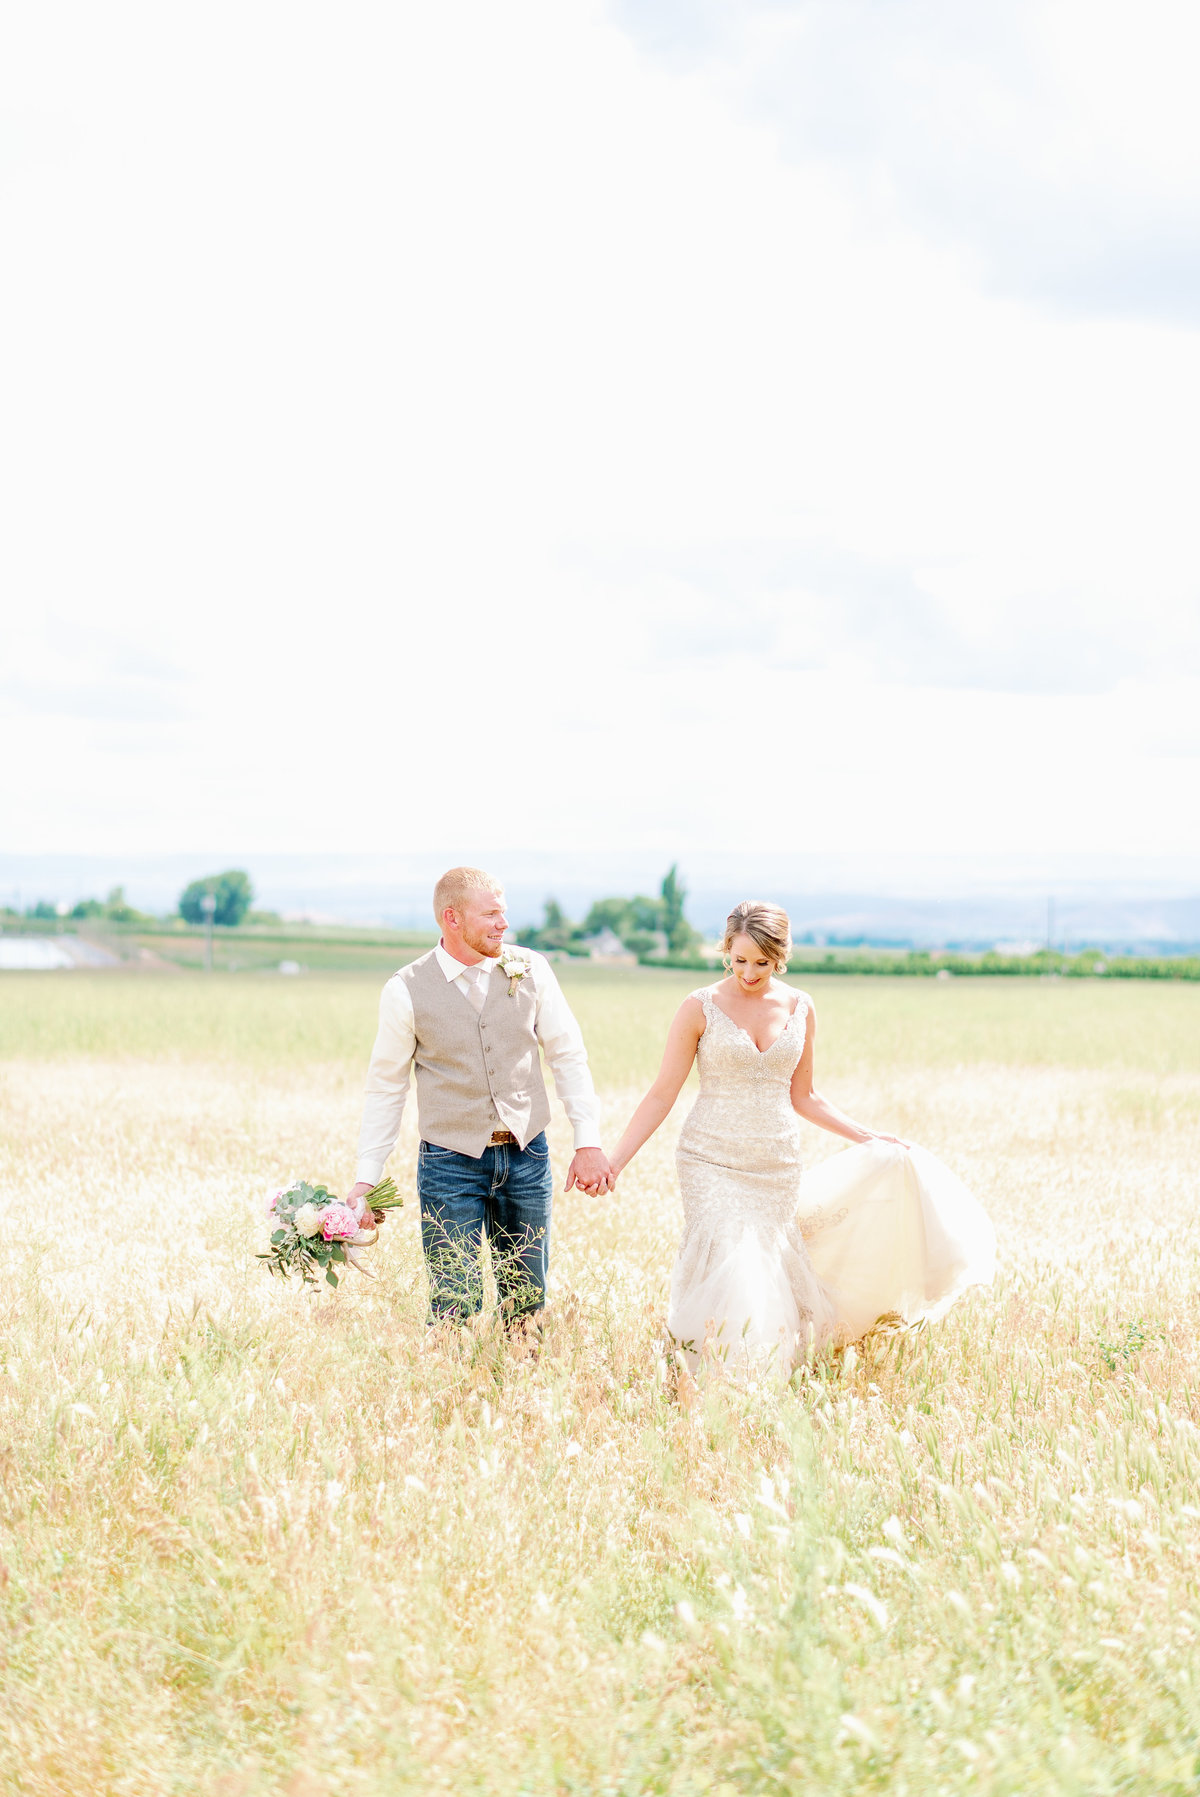 Bride and groom walking through field